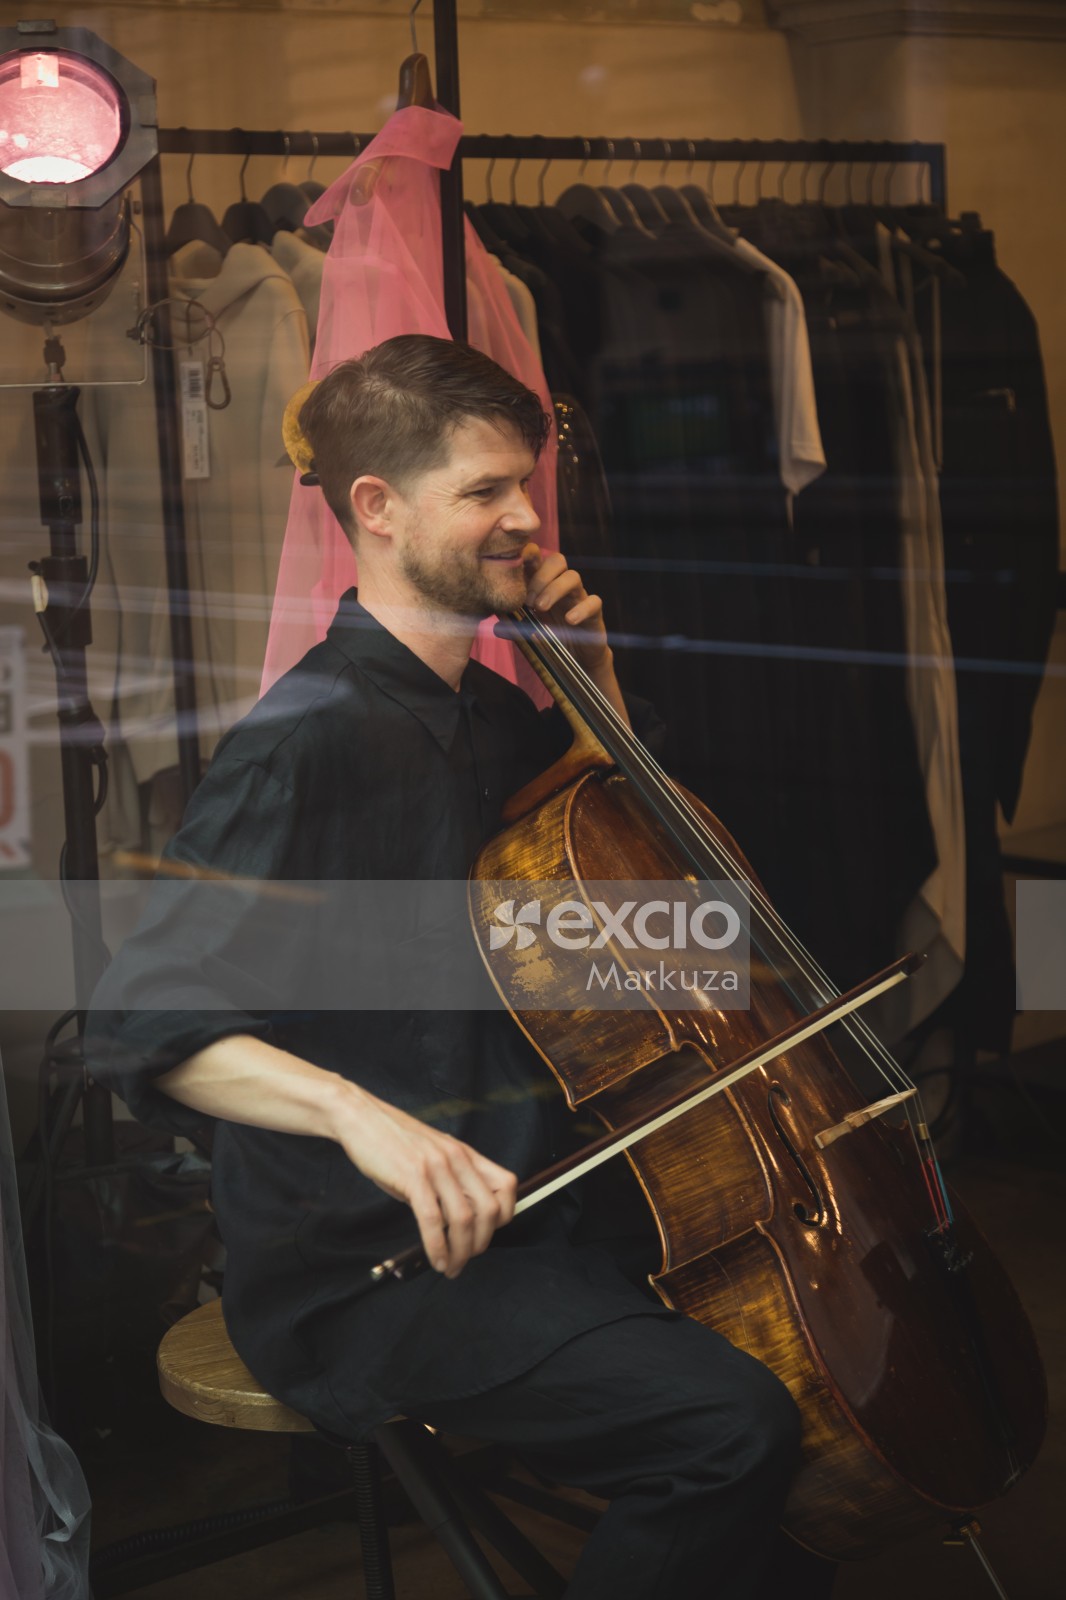 Man playing cello in black attire